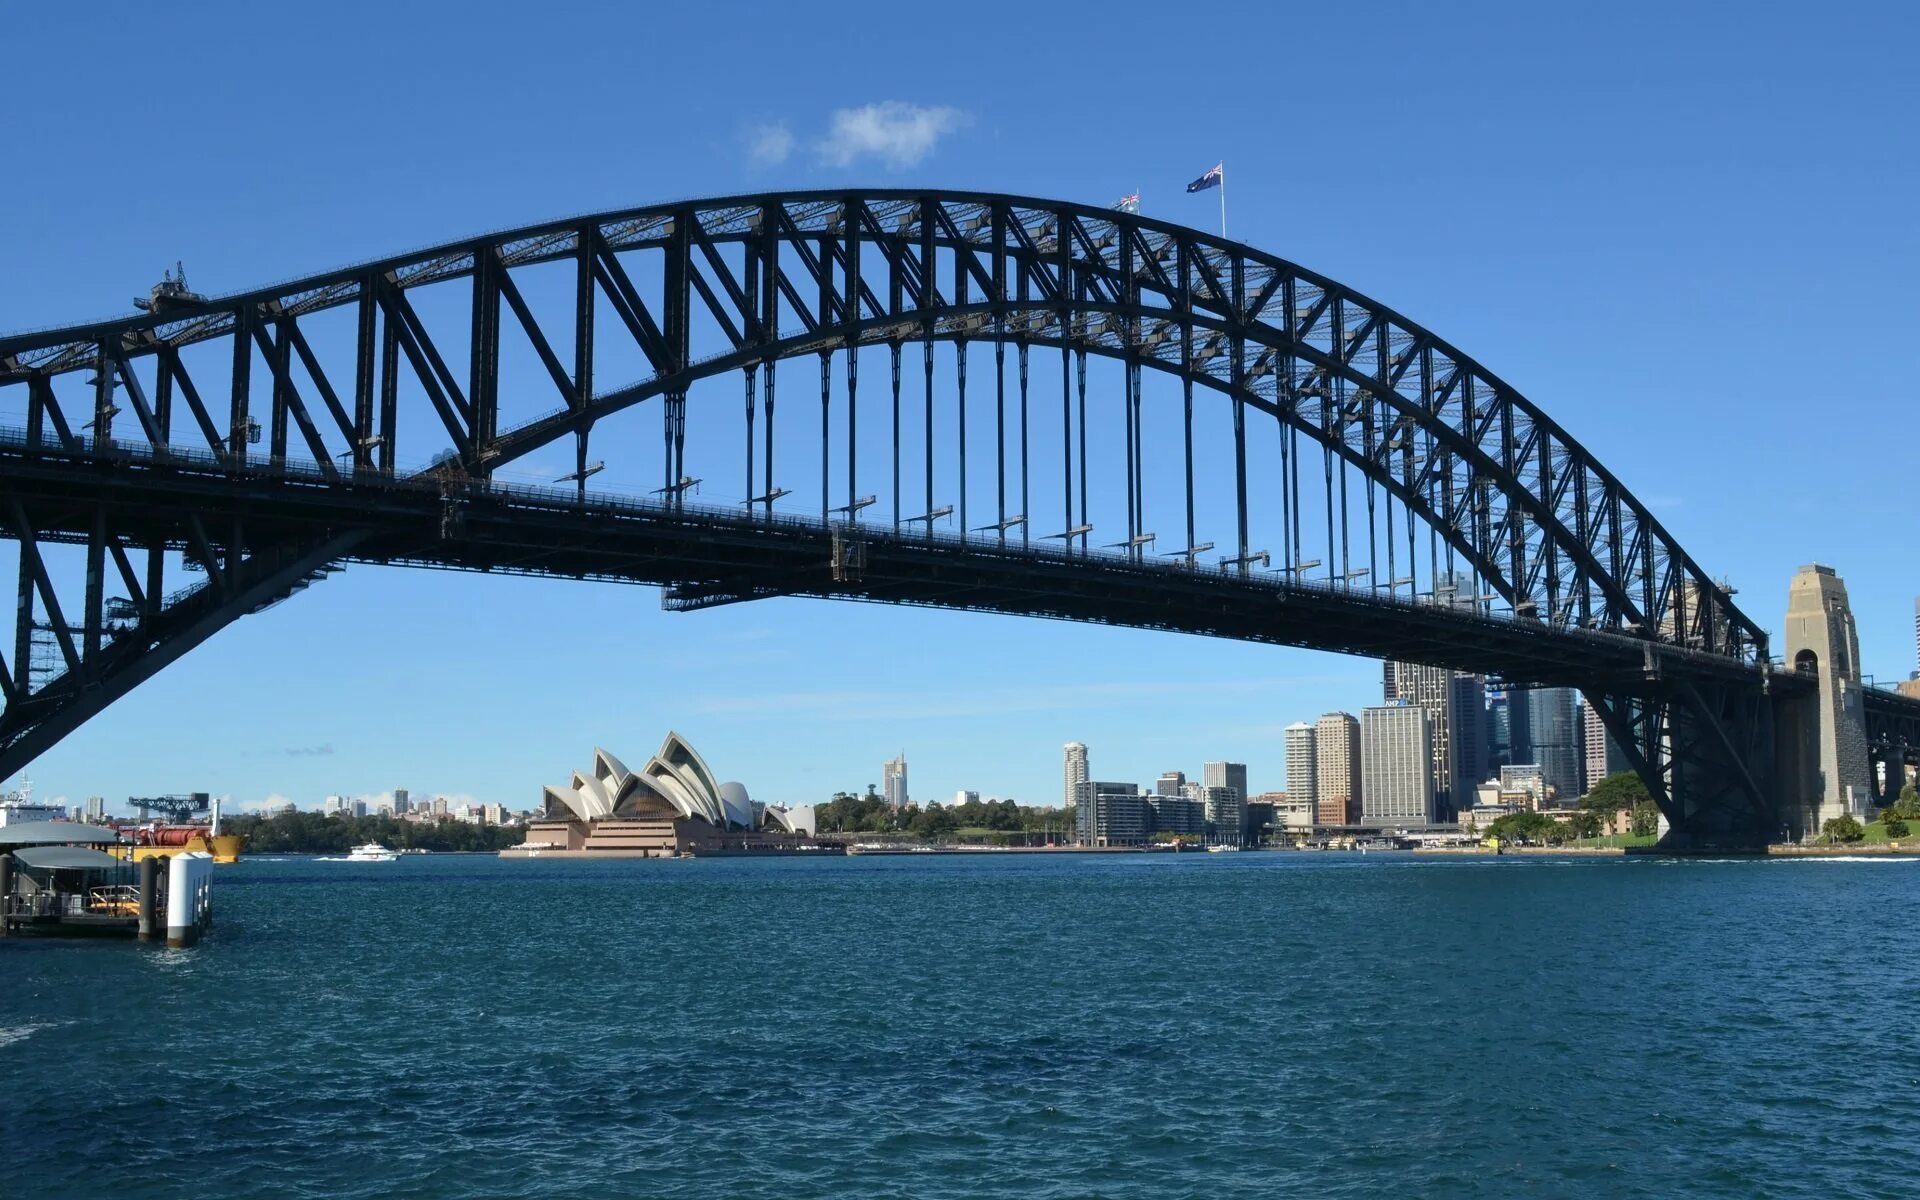 Harbour bridge. Мост Харбор-бридж в Сиднее. Мост Харбор бридж в Австралии. Харбор-бридж (Сидней, Австралия). Австралия мост Харбор бридж (г. Сидней).